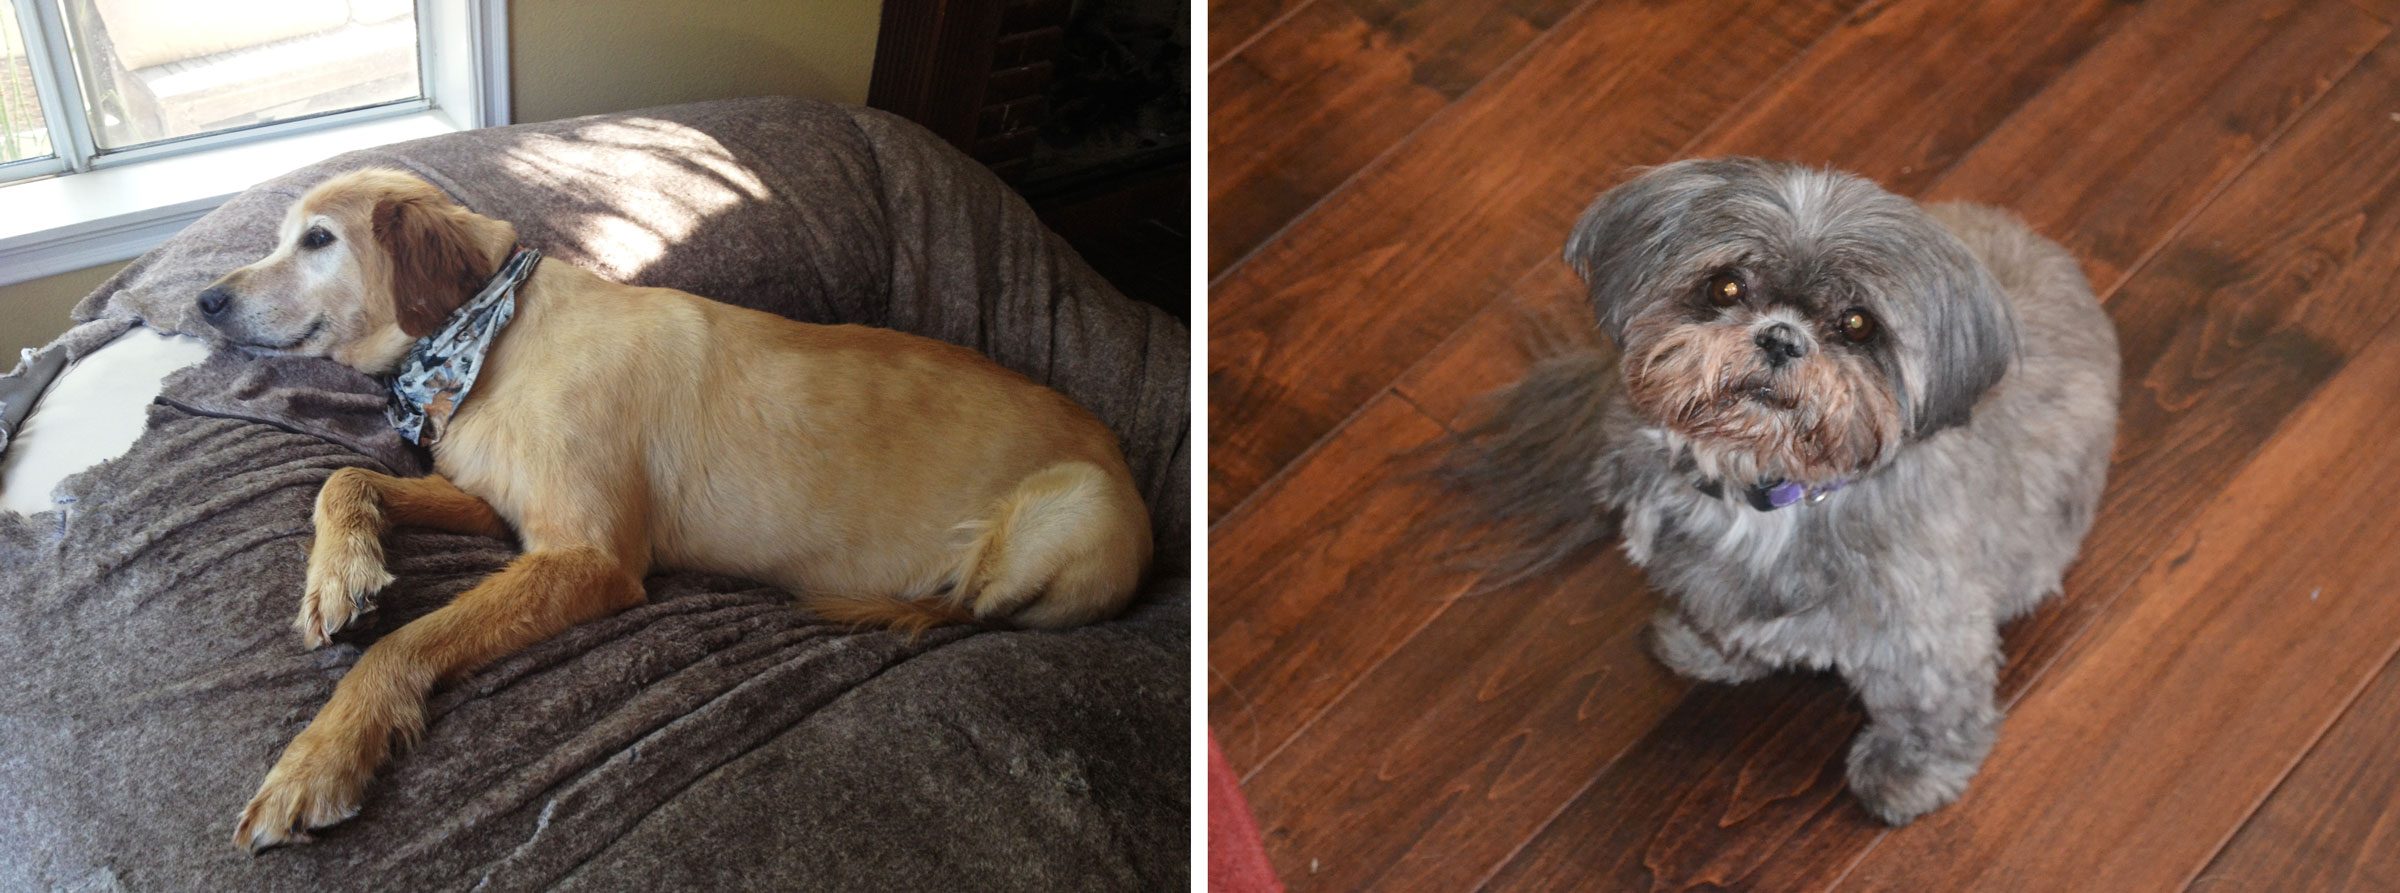 Malibu and Grandma, the dogs that received CBD treatment